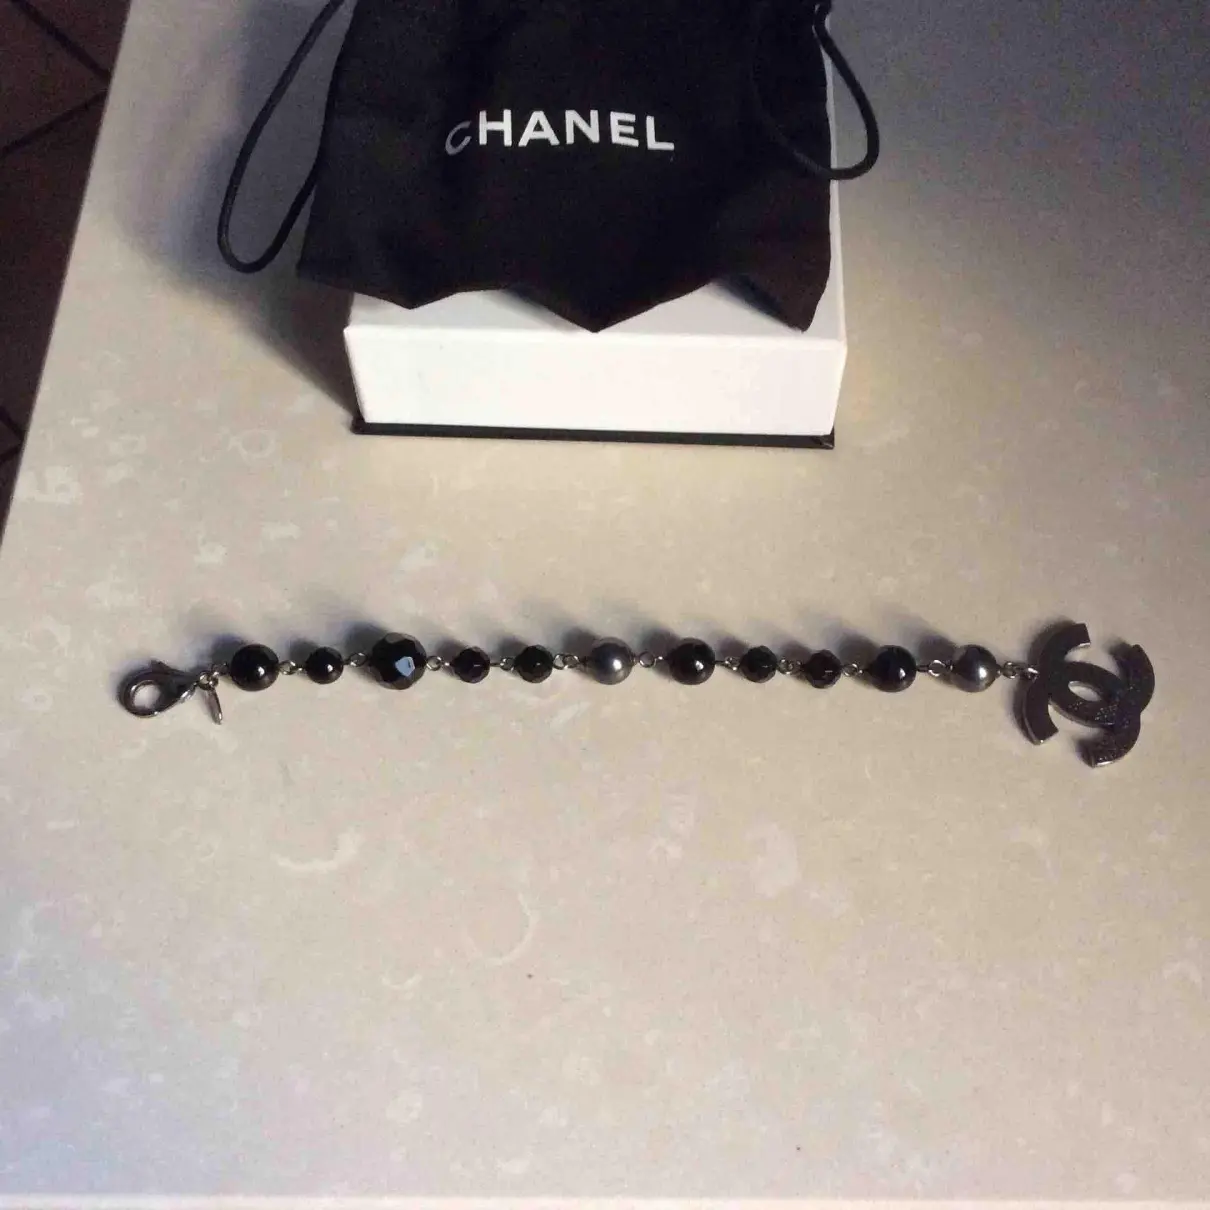 Buy Chanel Black Metal Bracelet online